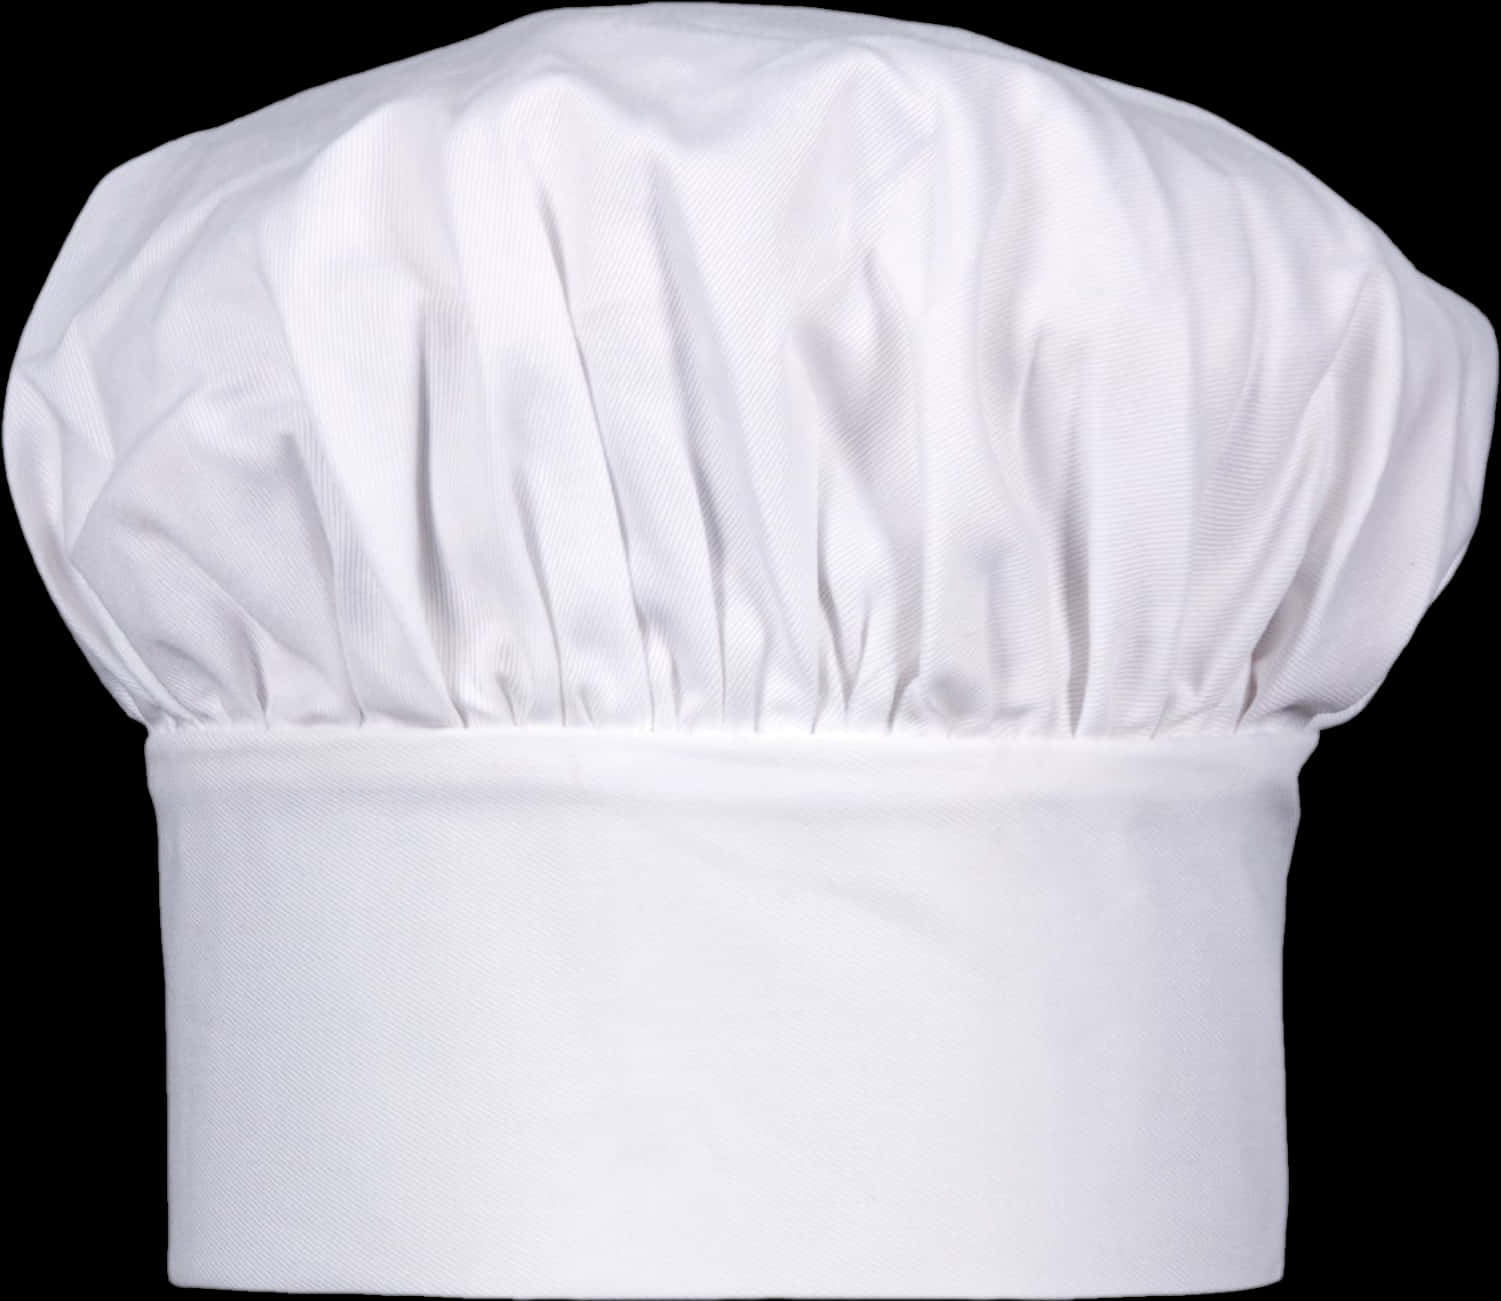 A White Chef's Hat